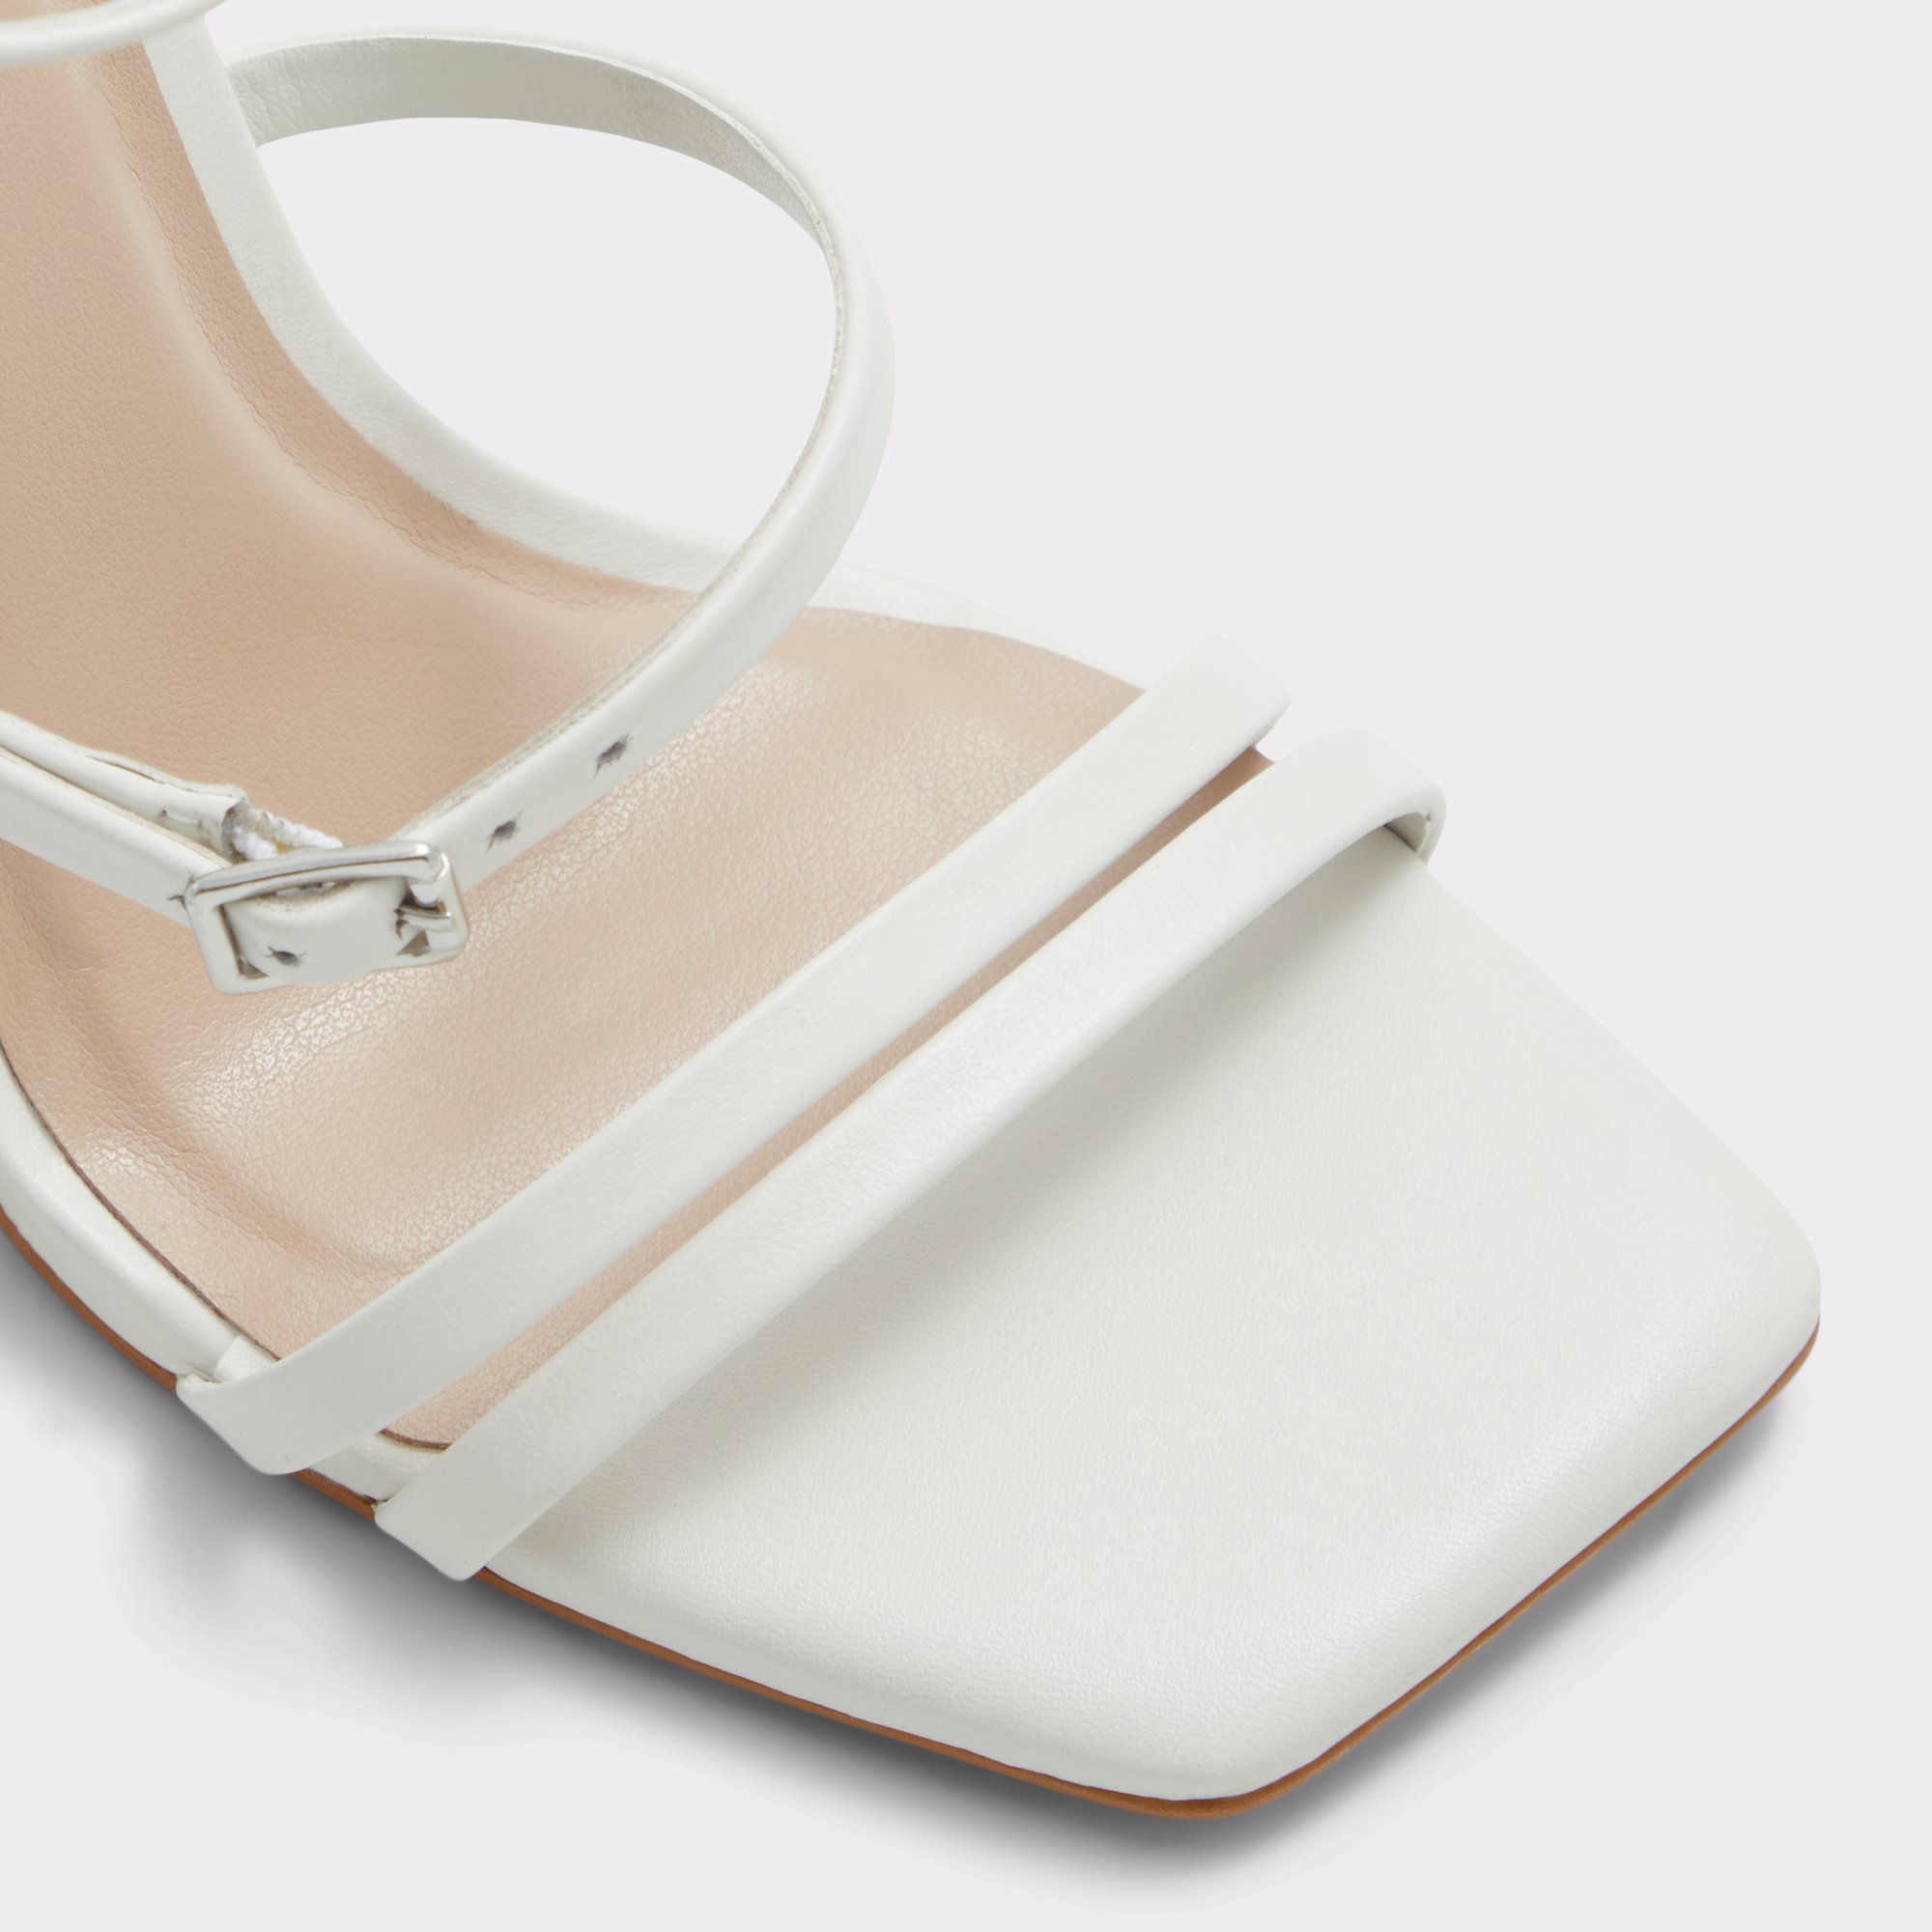 Rostyn White Women's Strappy sandals | ALDO US